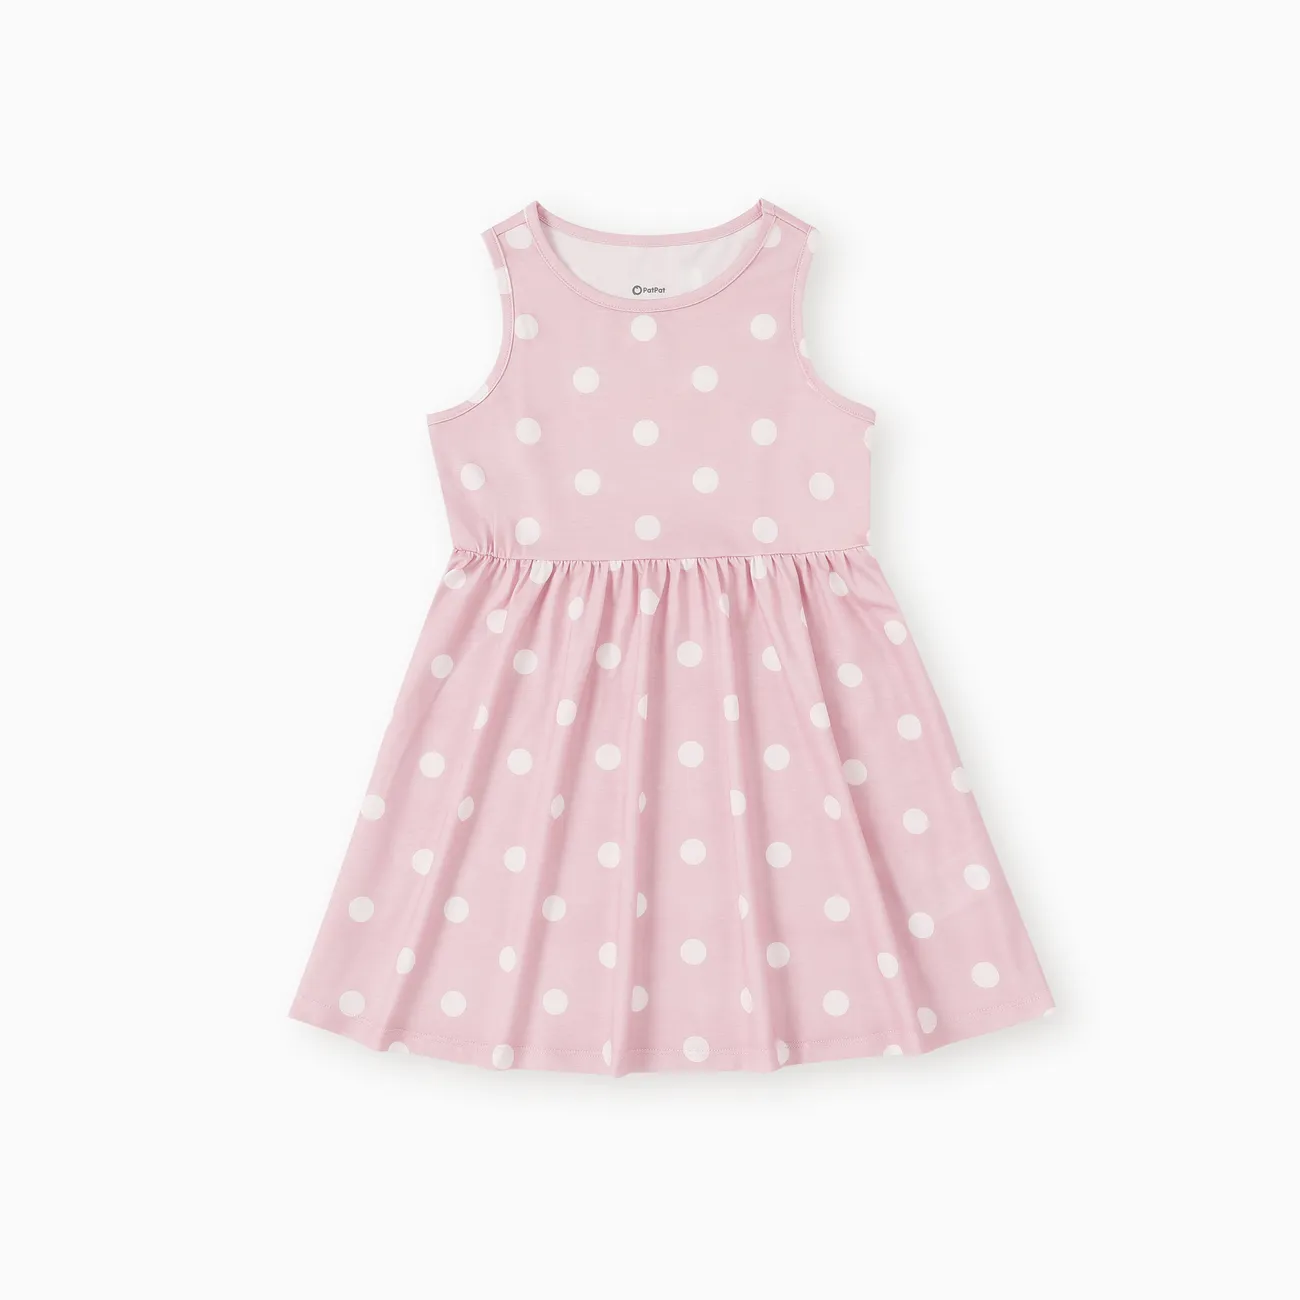 Toddler/Kid Girl Heart Print/Polka dots Sleeveless Dress Pink big image 1